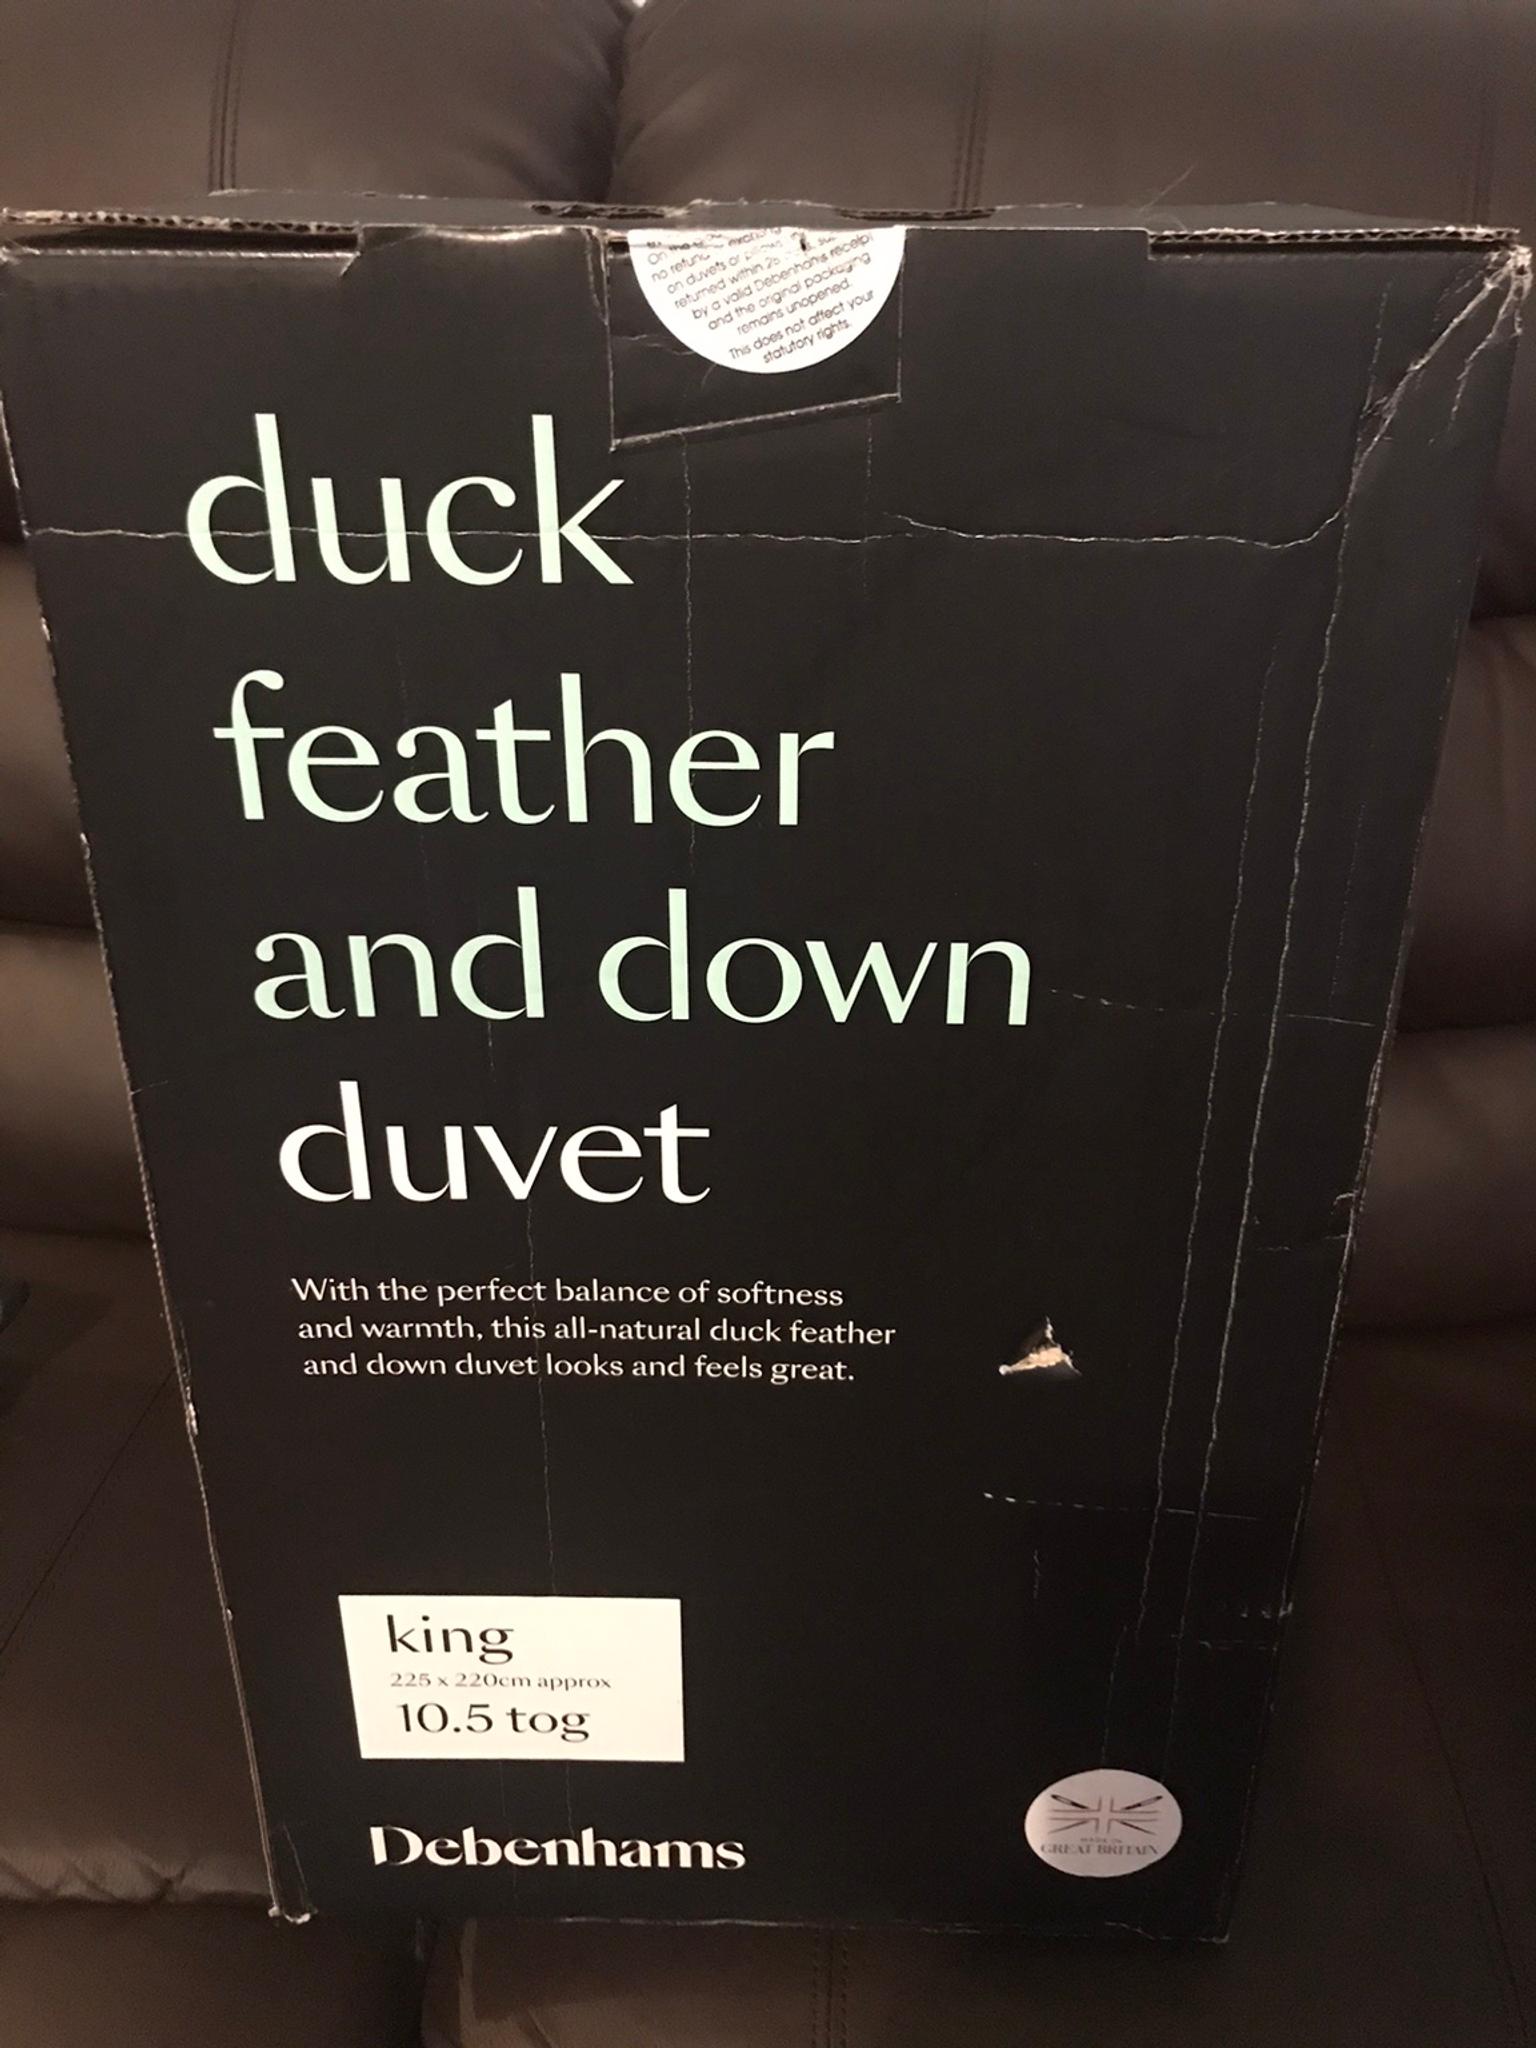 debenhams duck feather and down duvet